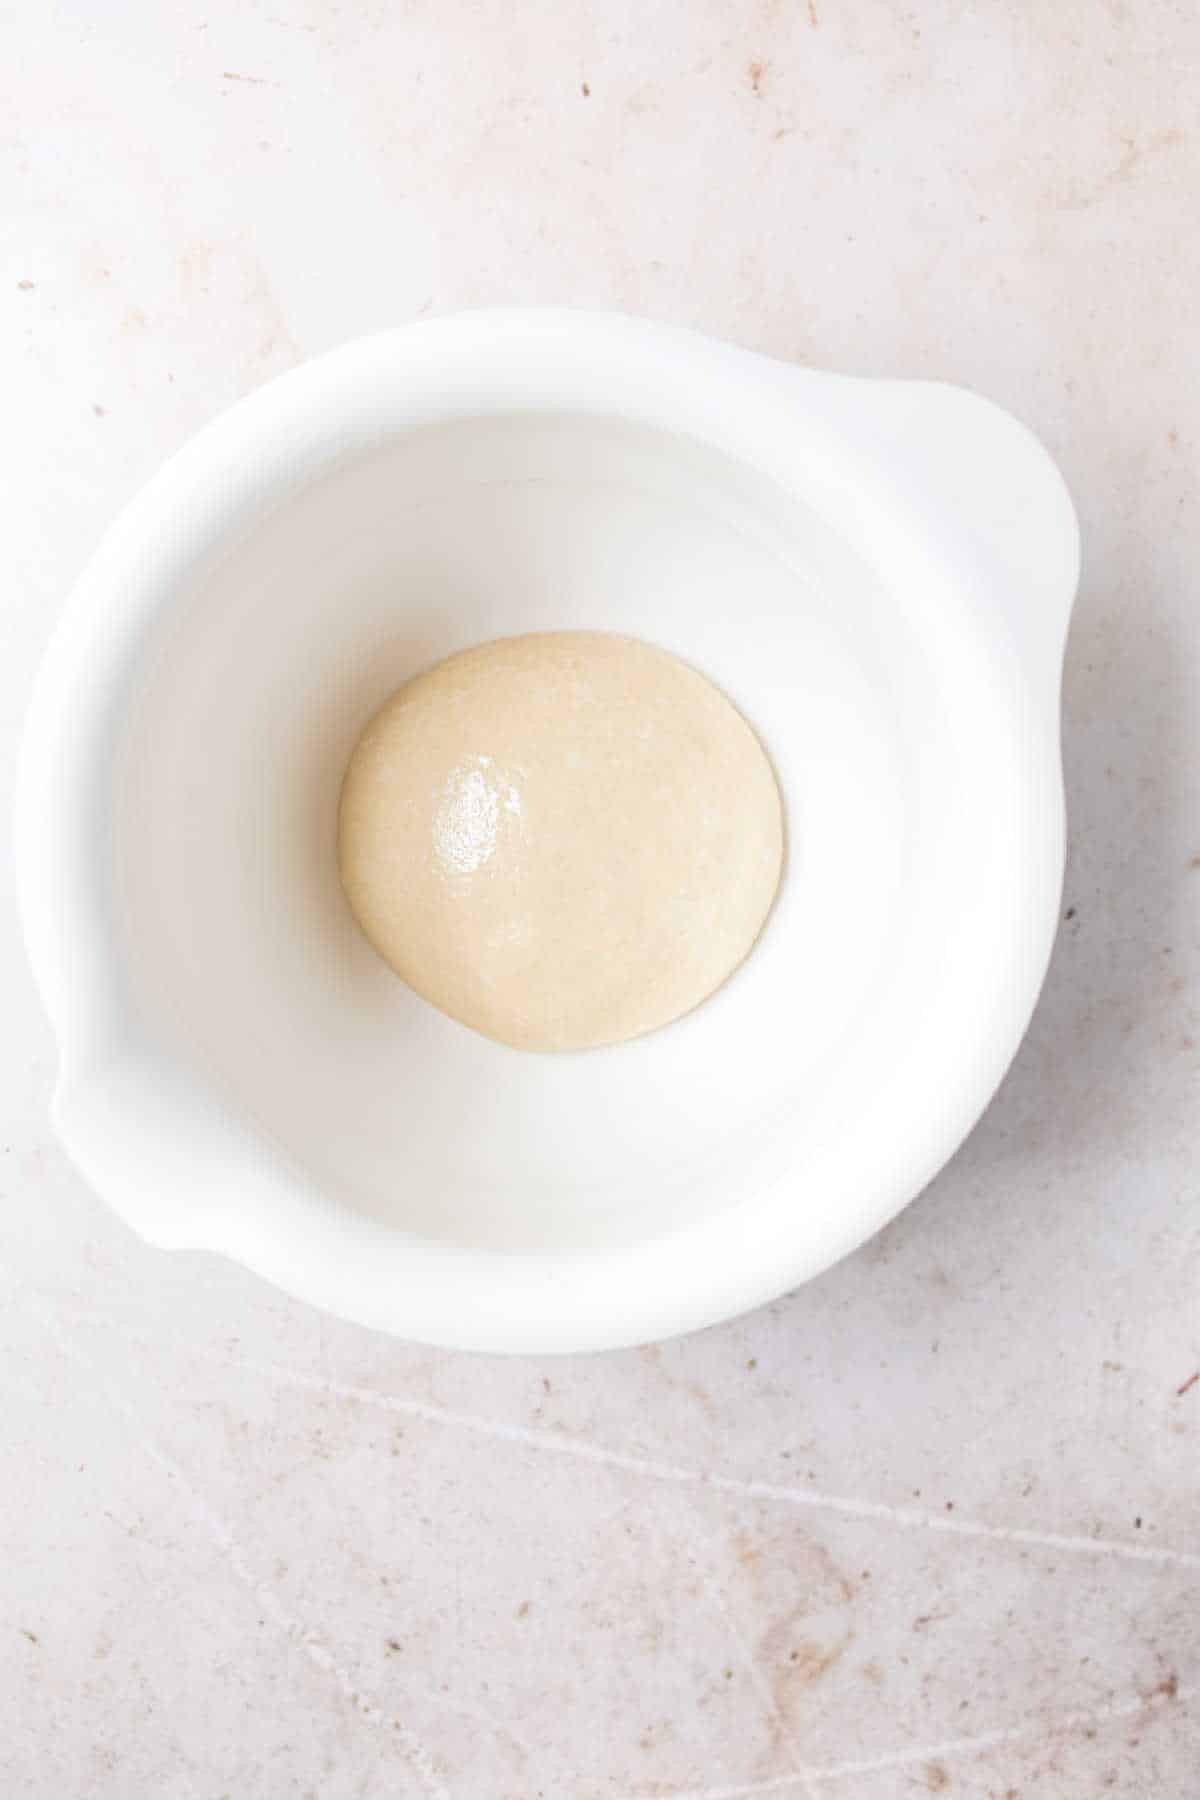 Cinnamon twist dough in a white mixing bowl. 